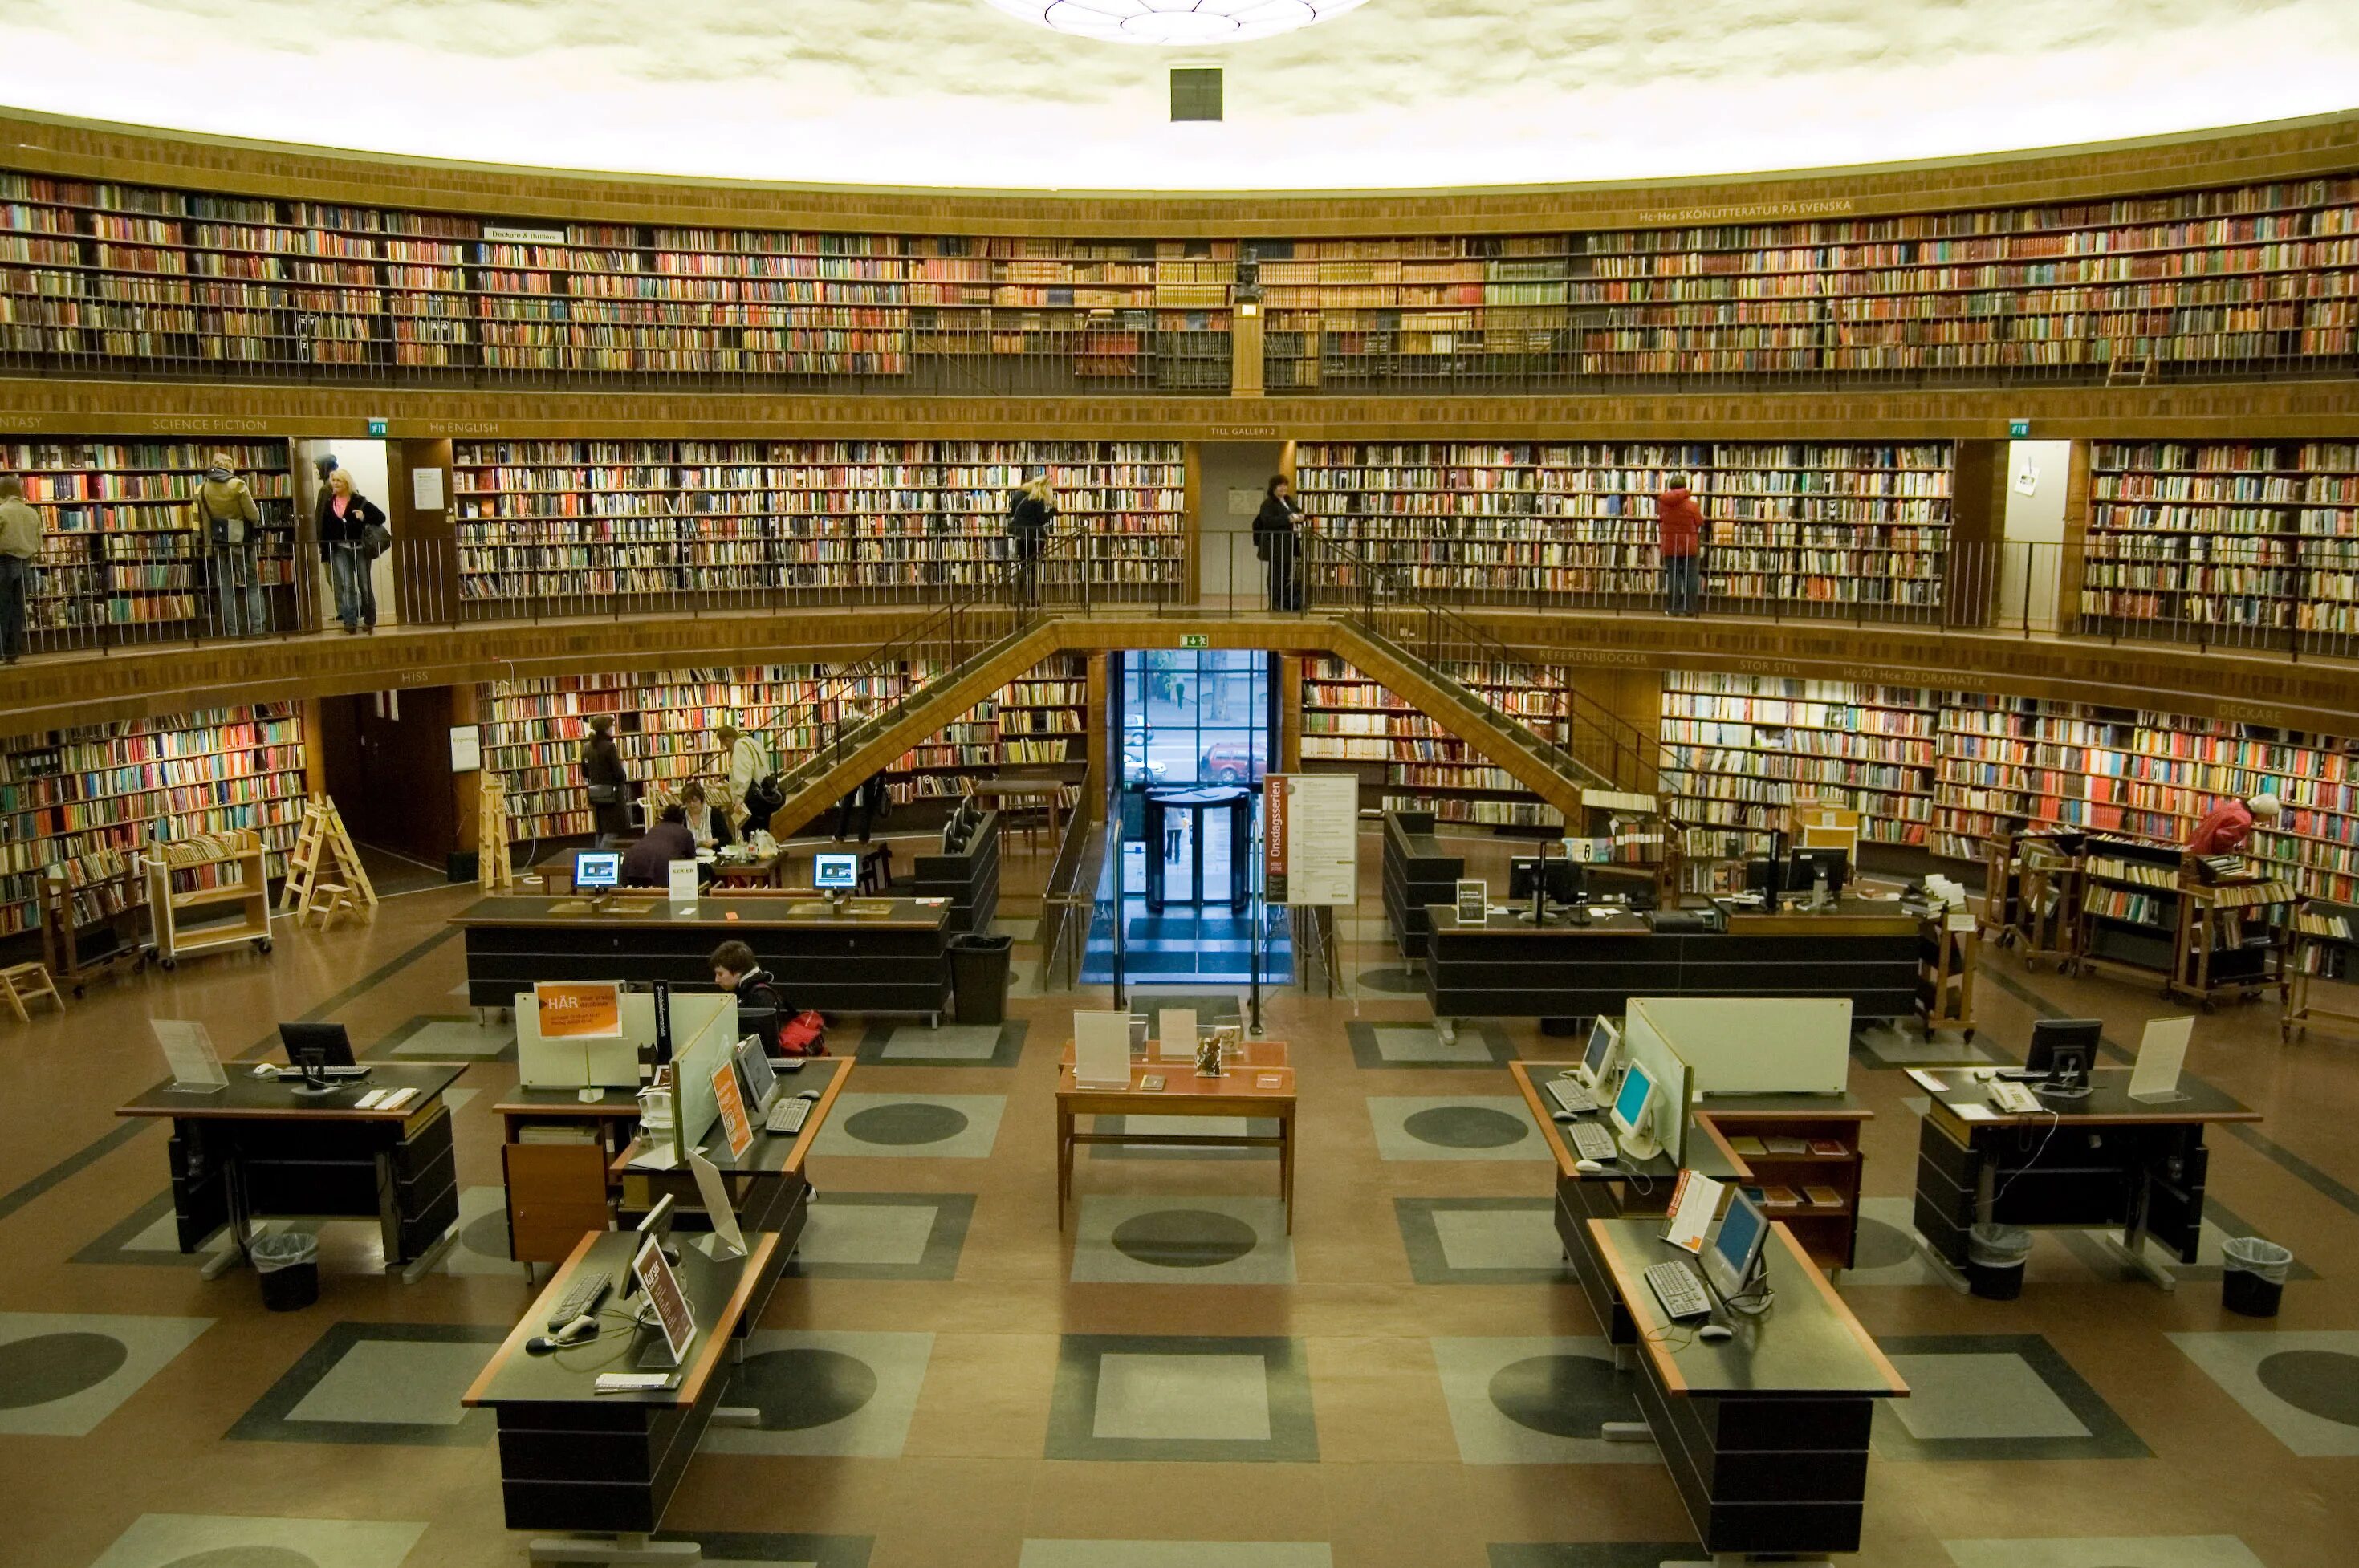 G library. Стокгольмская городская библиотека, Стокгольм. Лейпцигская немецкая библиотека. Стокгольмская общественная библиотека Швеция. Библиотека в Стокгольме Асплунд.